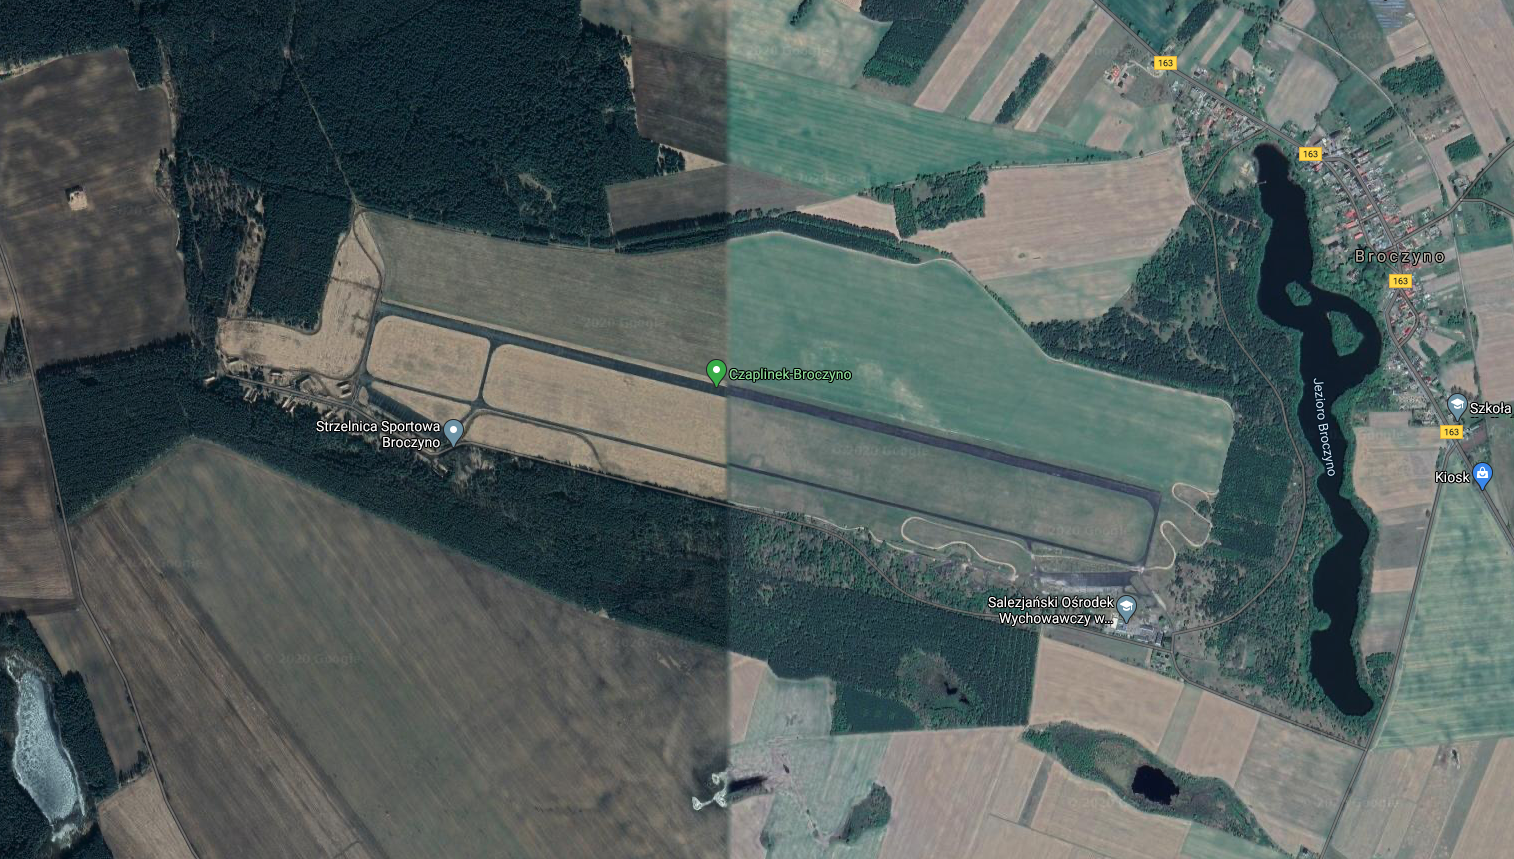 Czaplinek Broczyno airport, satellite view. 2018 year. Photo of LAC